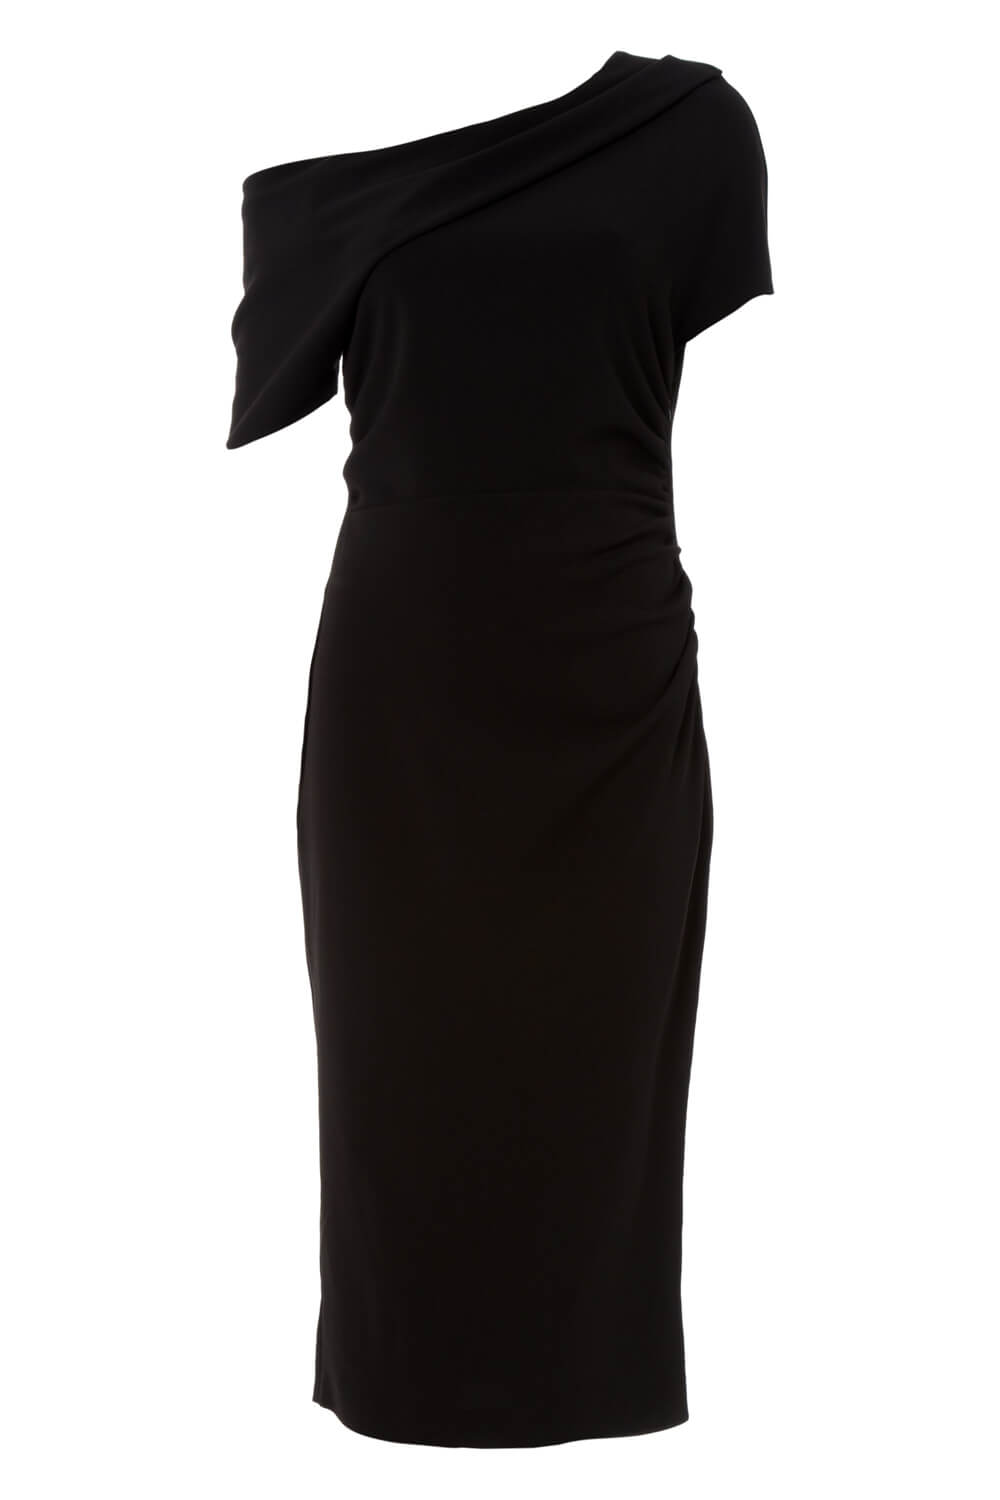 One Shoulder Crepe Dress in Black - Roman Originals UK